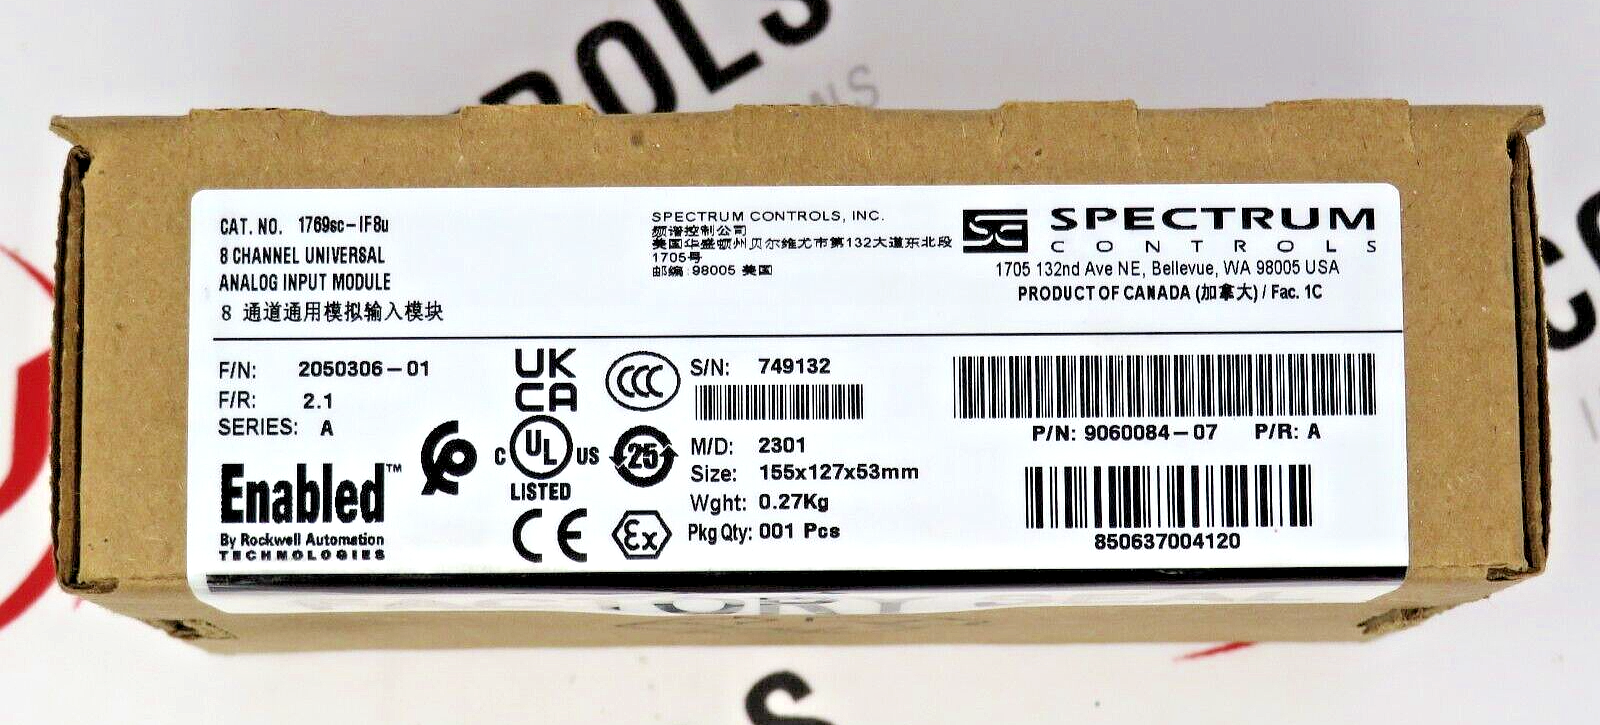 Spectrum Controls 1769SC-IF8U 8-Channel Universal Analog Input Module Series A